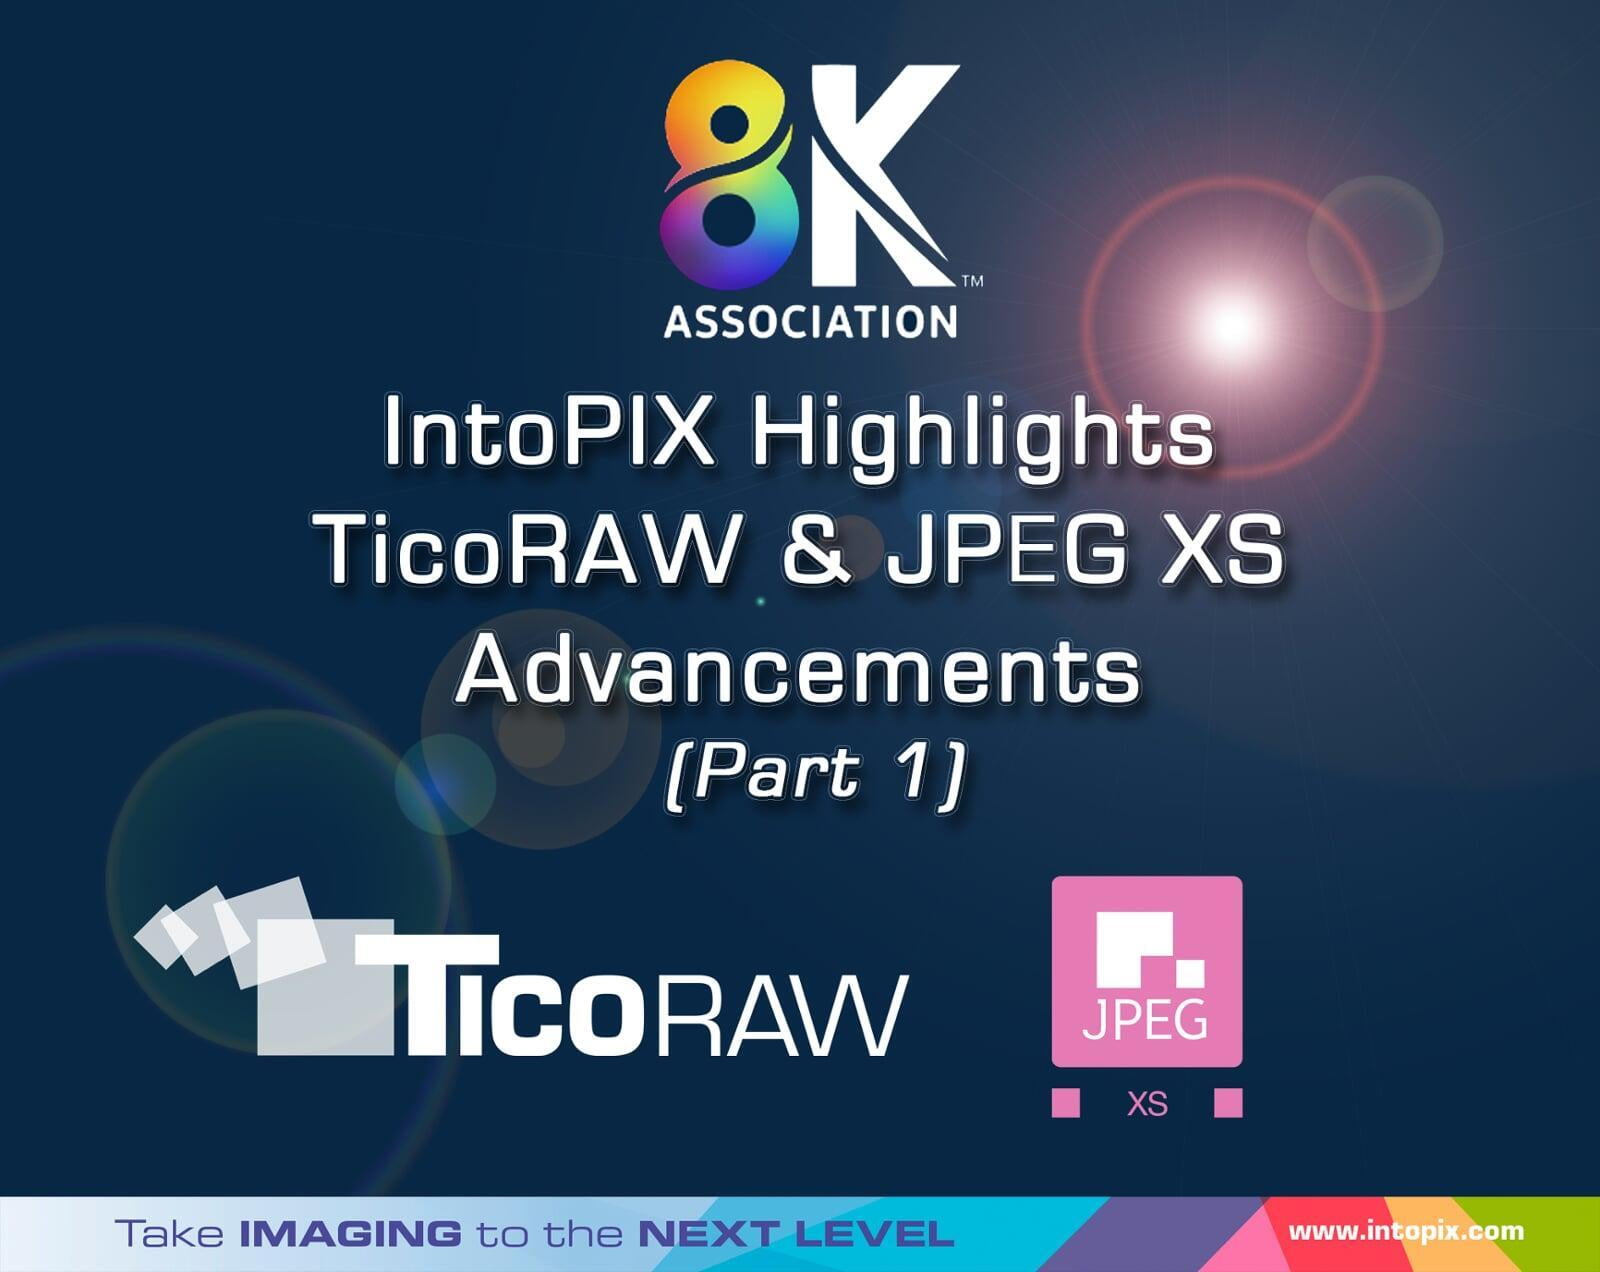 8K Association: IntoPIX Highlights TicoRAW and JPEG XS Advancements (Part 1) 